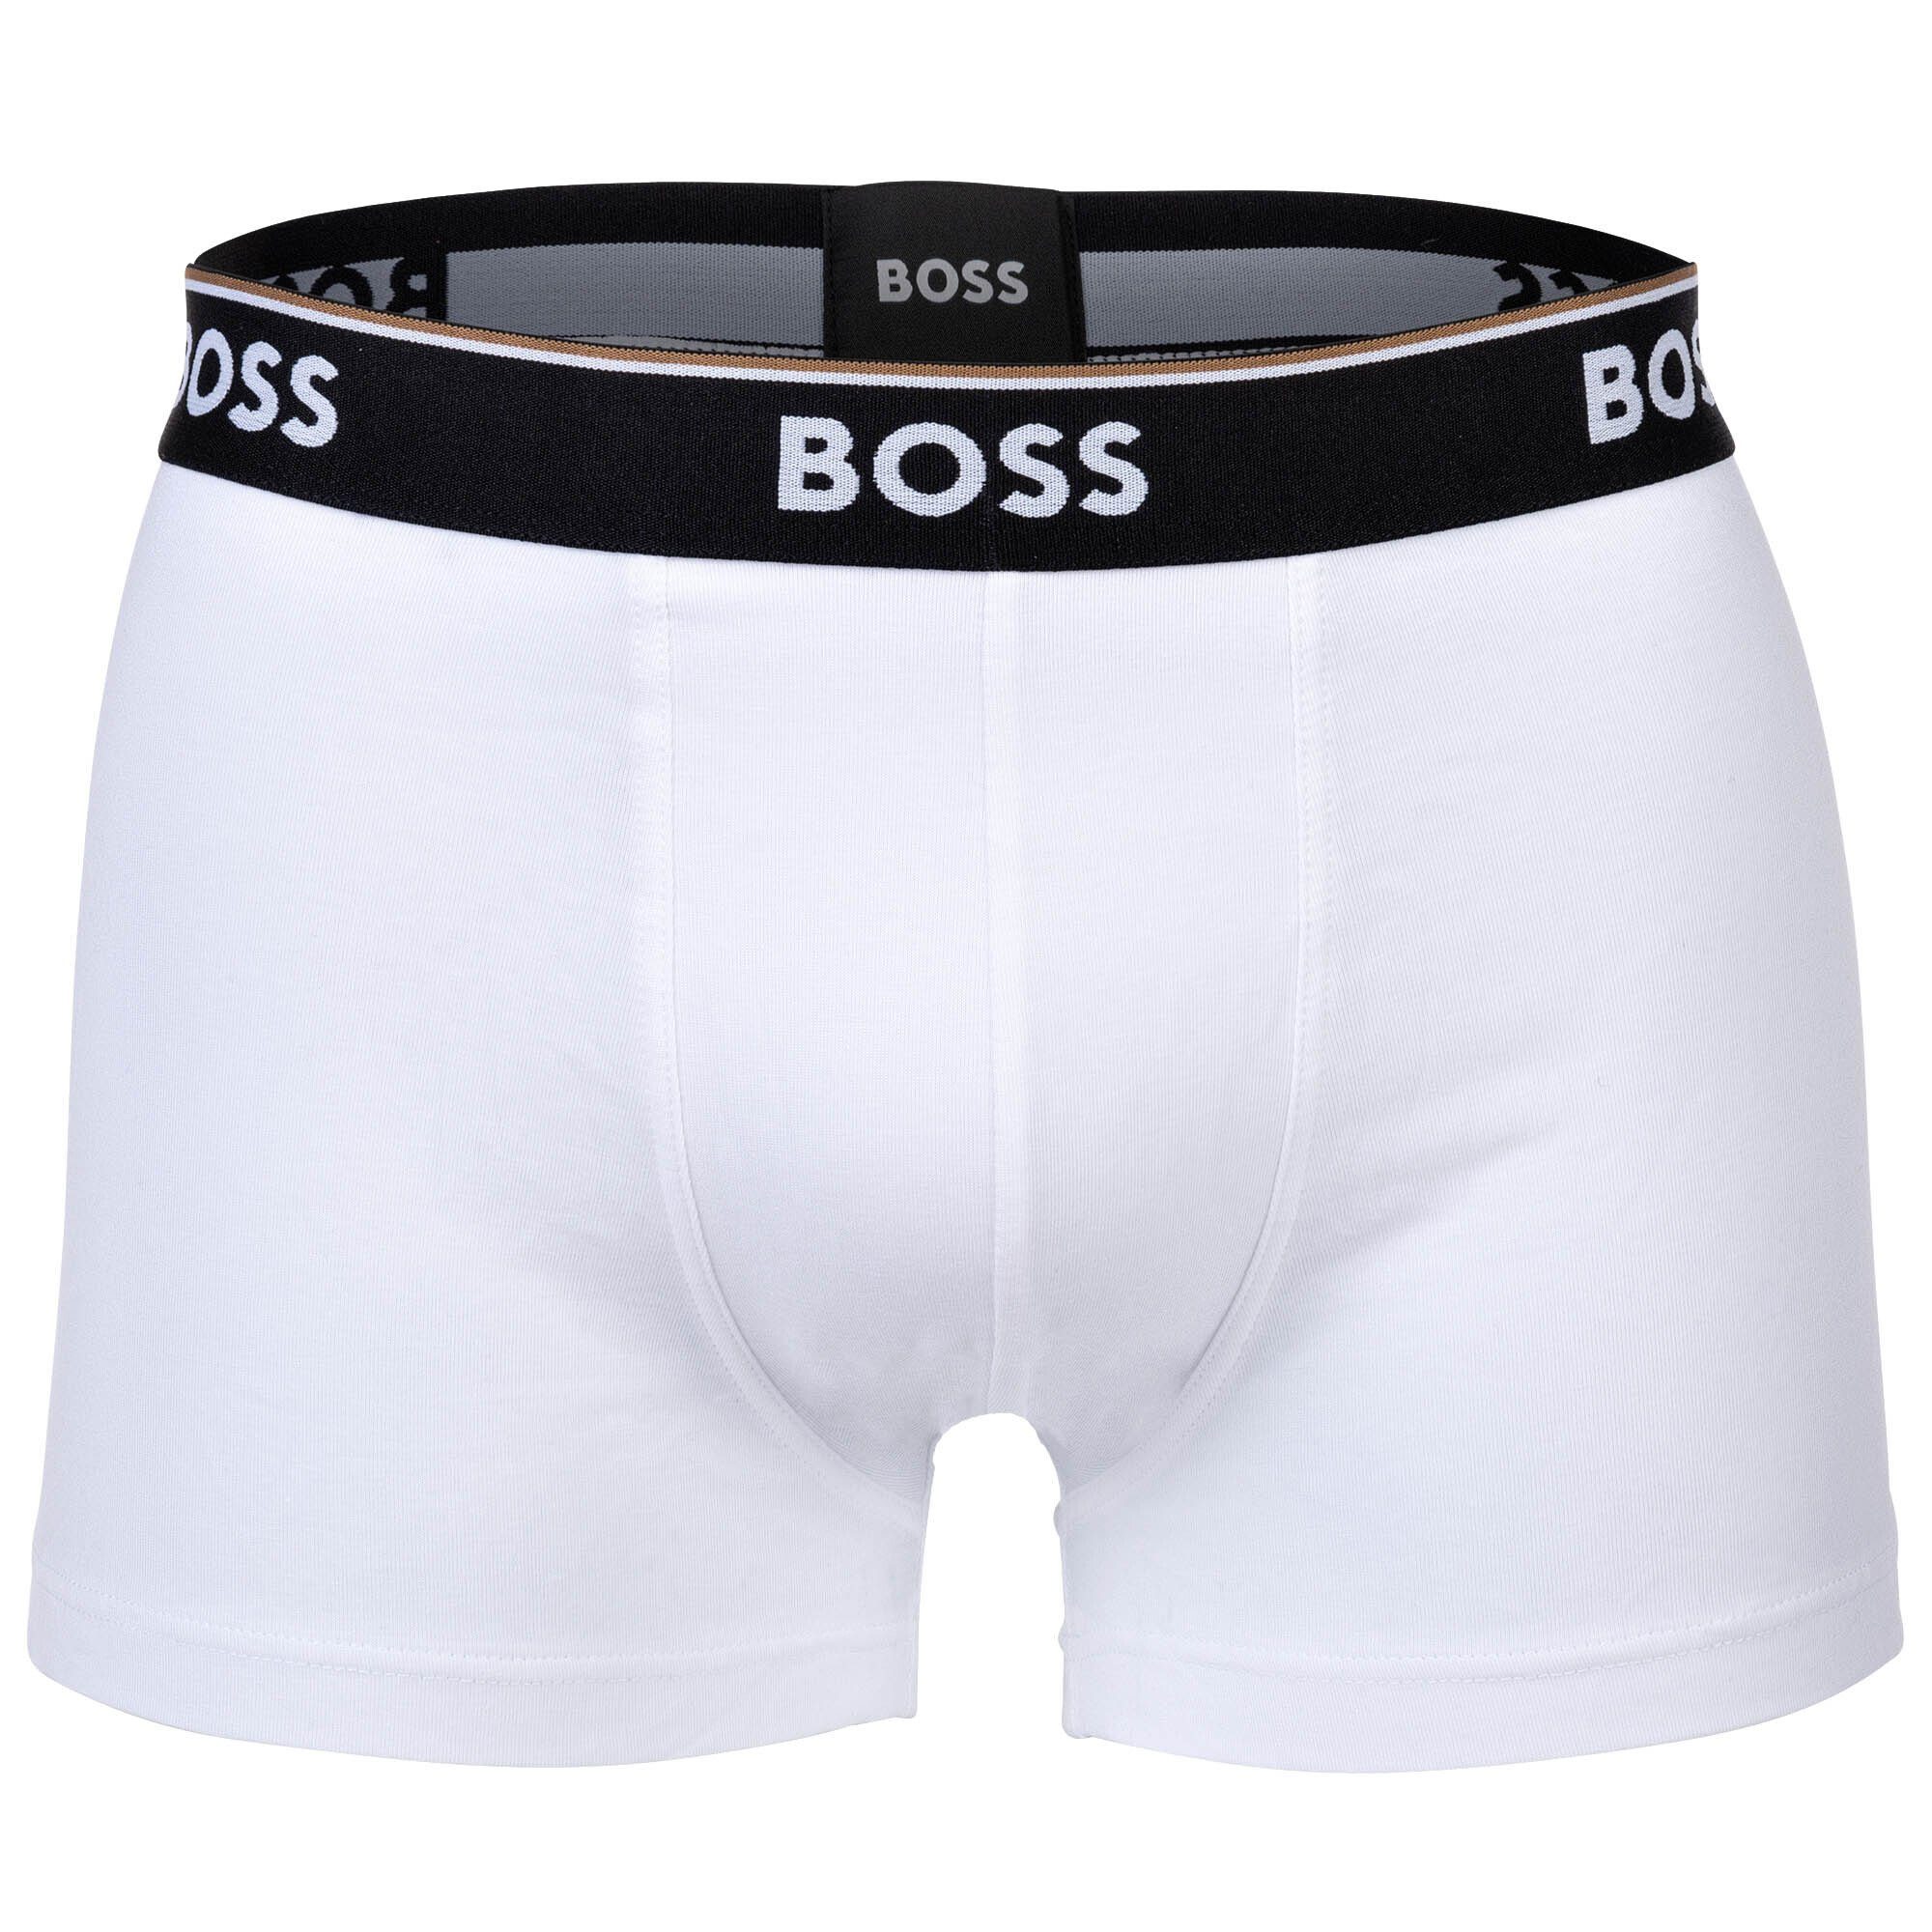 BOSS Herren - Power, Boxer Schwarz/Braun/Weiß Boxershorts Pack 3P Trunks, 3er